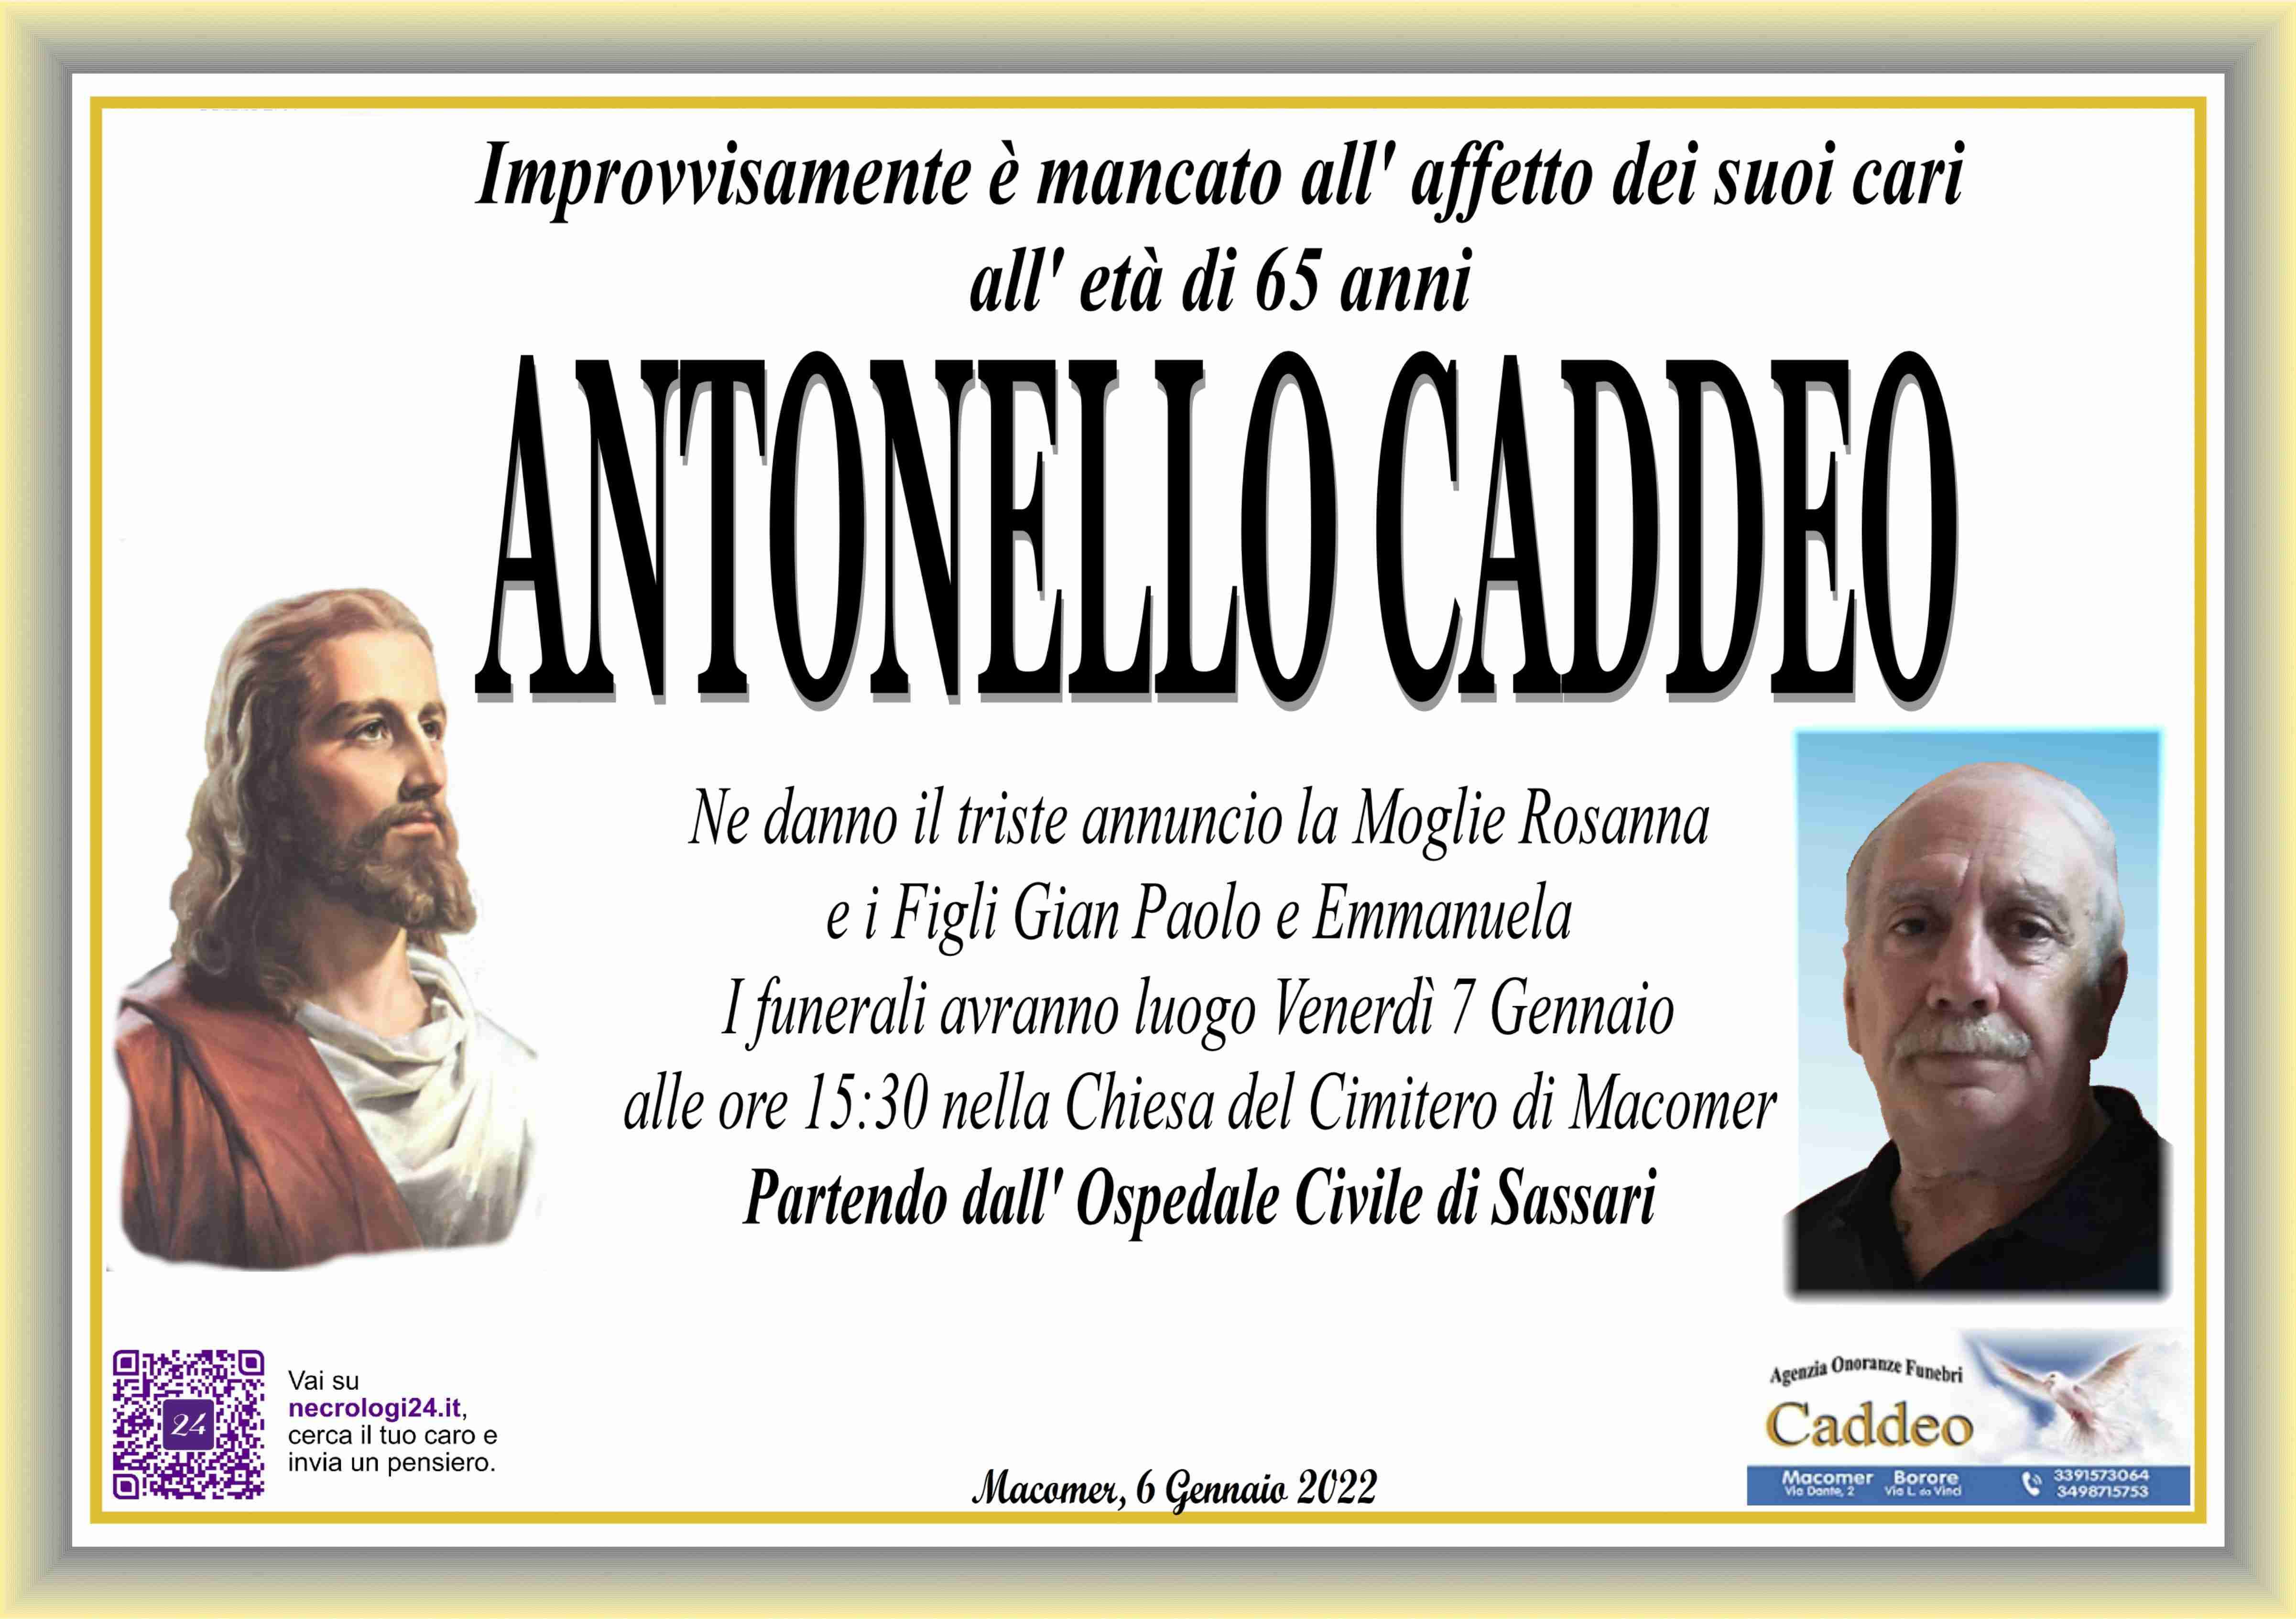 Antonello Caddeo